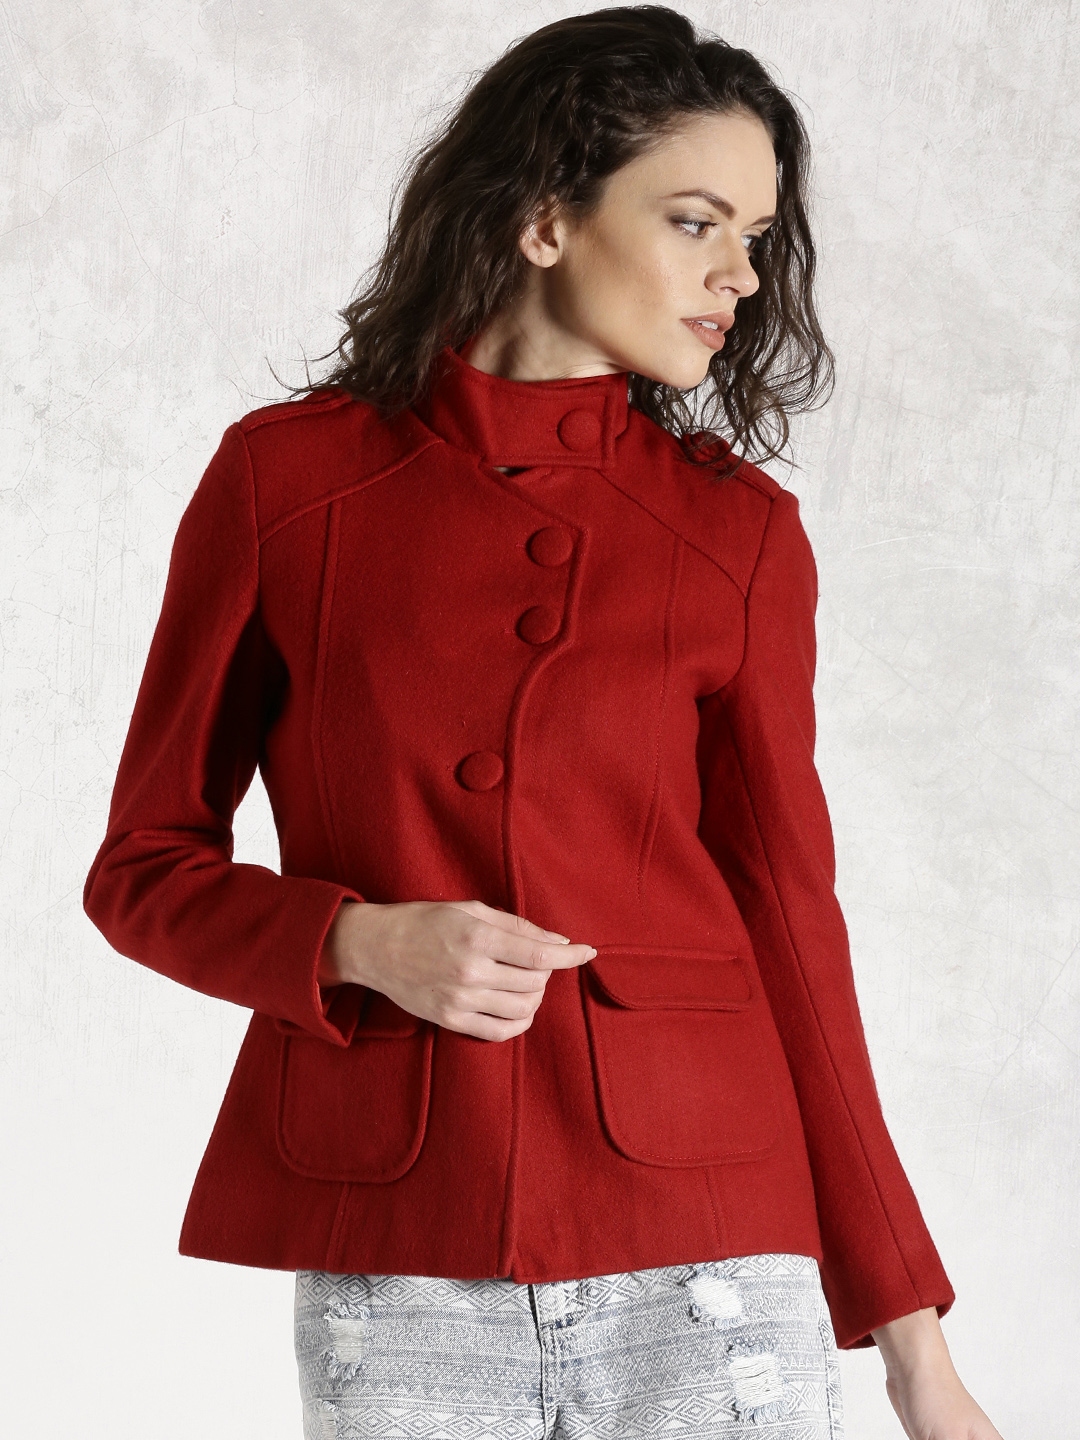 Buy Roadster Red Jacket - Jackets for Women 1275310 | Myntra